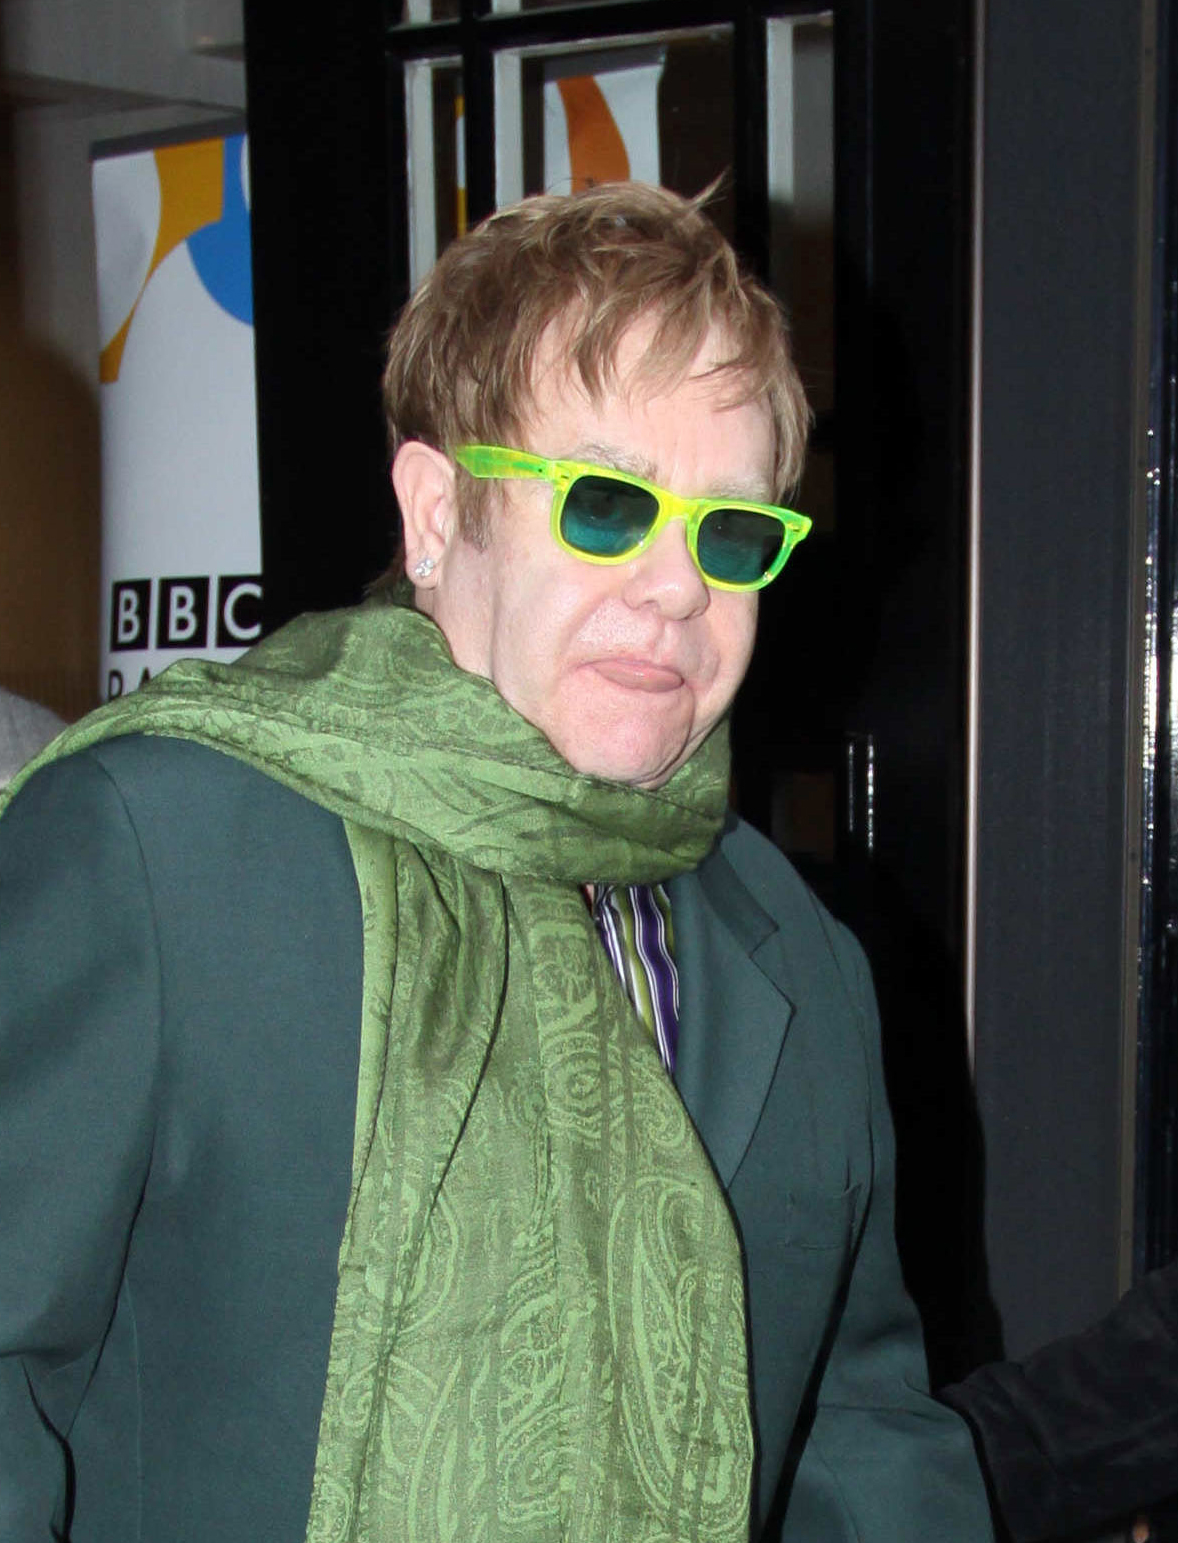 Elton John leaving Radio 2 studios in London this morning

MANDATORY BYLINE MUST BE USED...ISOIMAGES